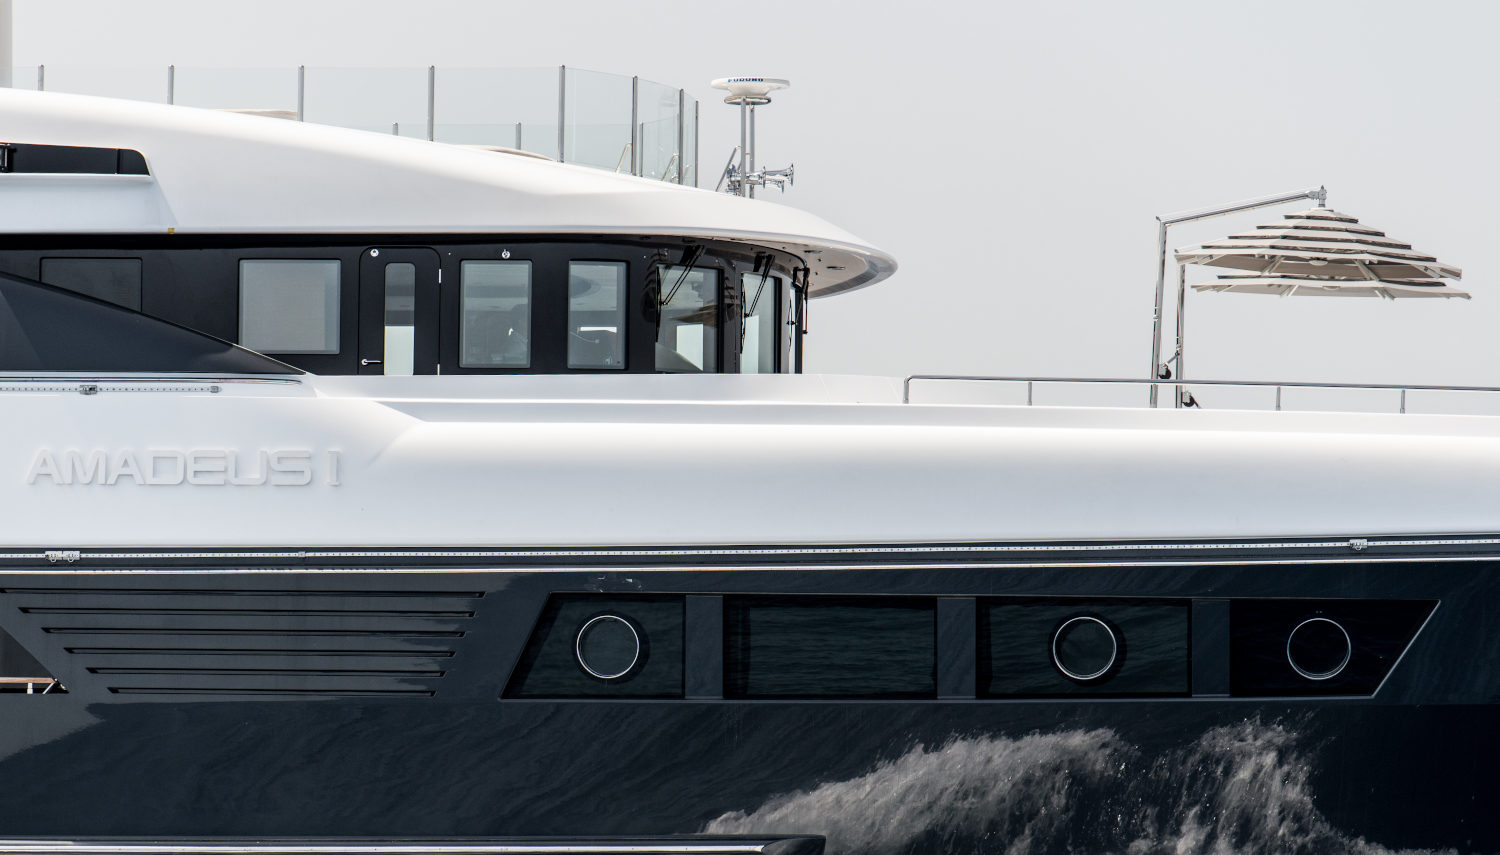 Vripack - Amadeus-I - Exterior design - Name Amadeus-I - Side view of the yacht - Enjoying life at sea - Yacht for charter